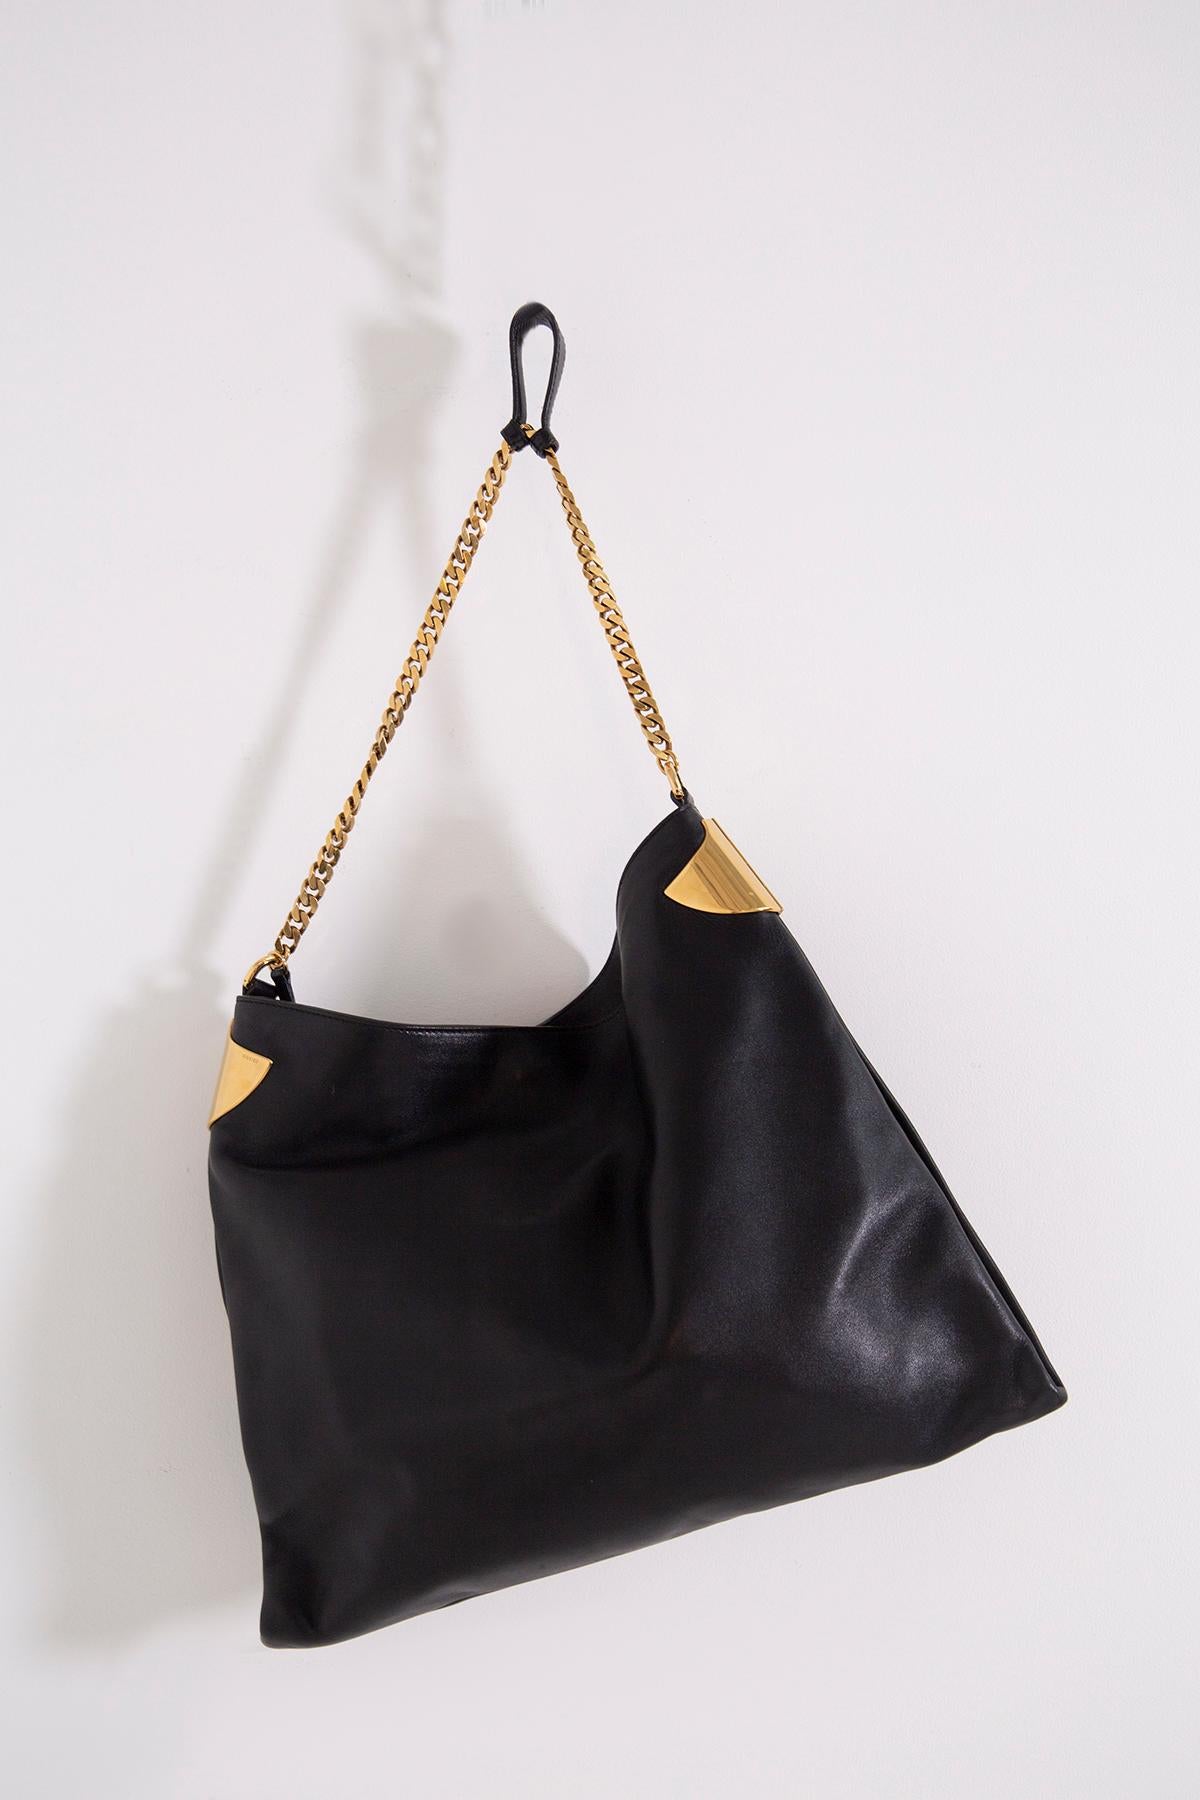 Women's Gucci Shoulder Bag Black Leather 1970 Collection